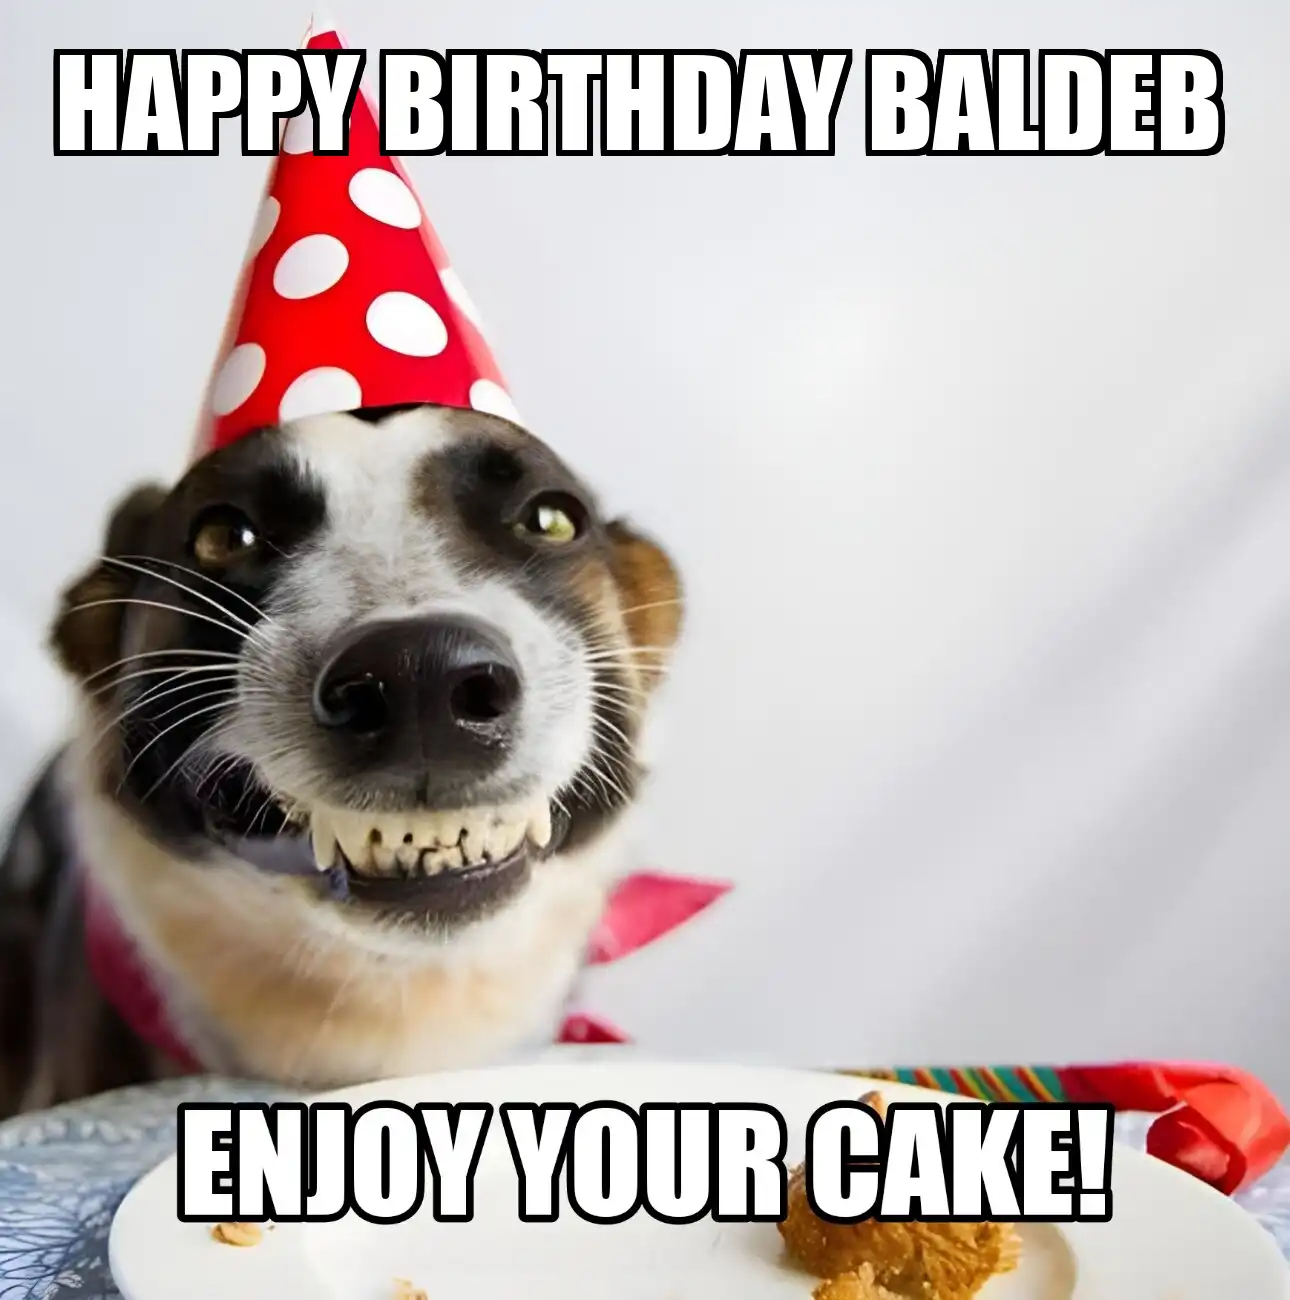 Happy Birthday Baldeb Enjoy Your Cake Dog Meme